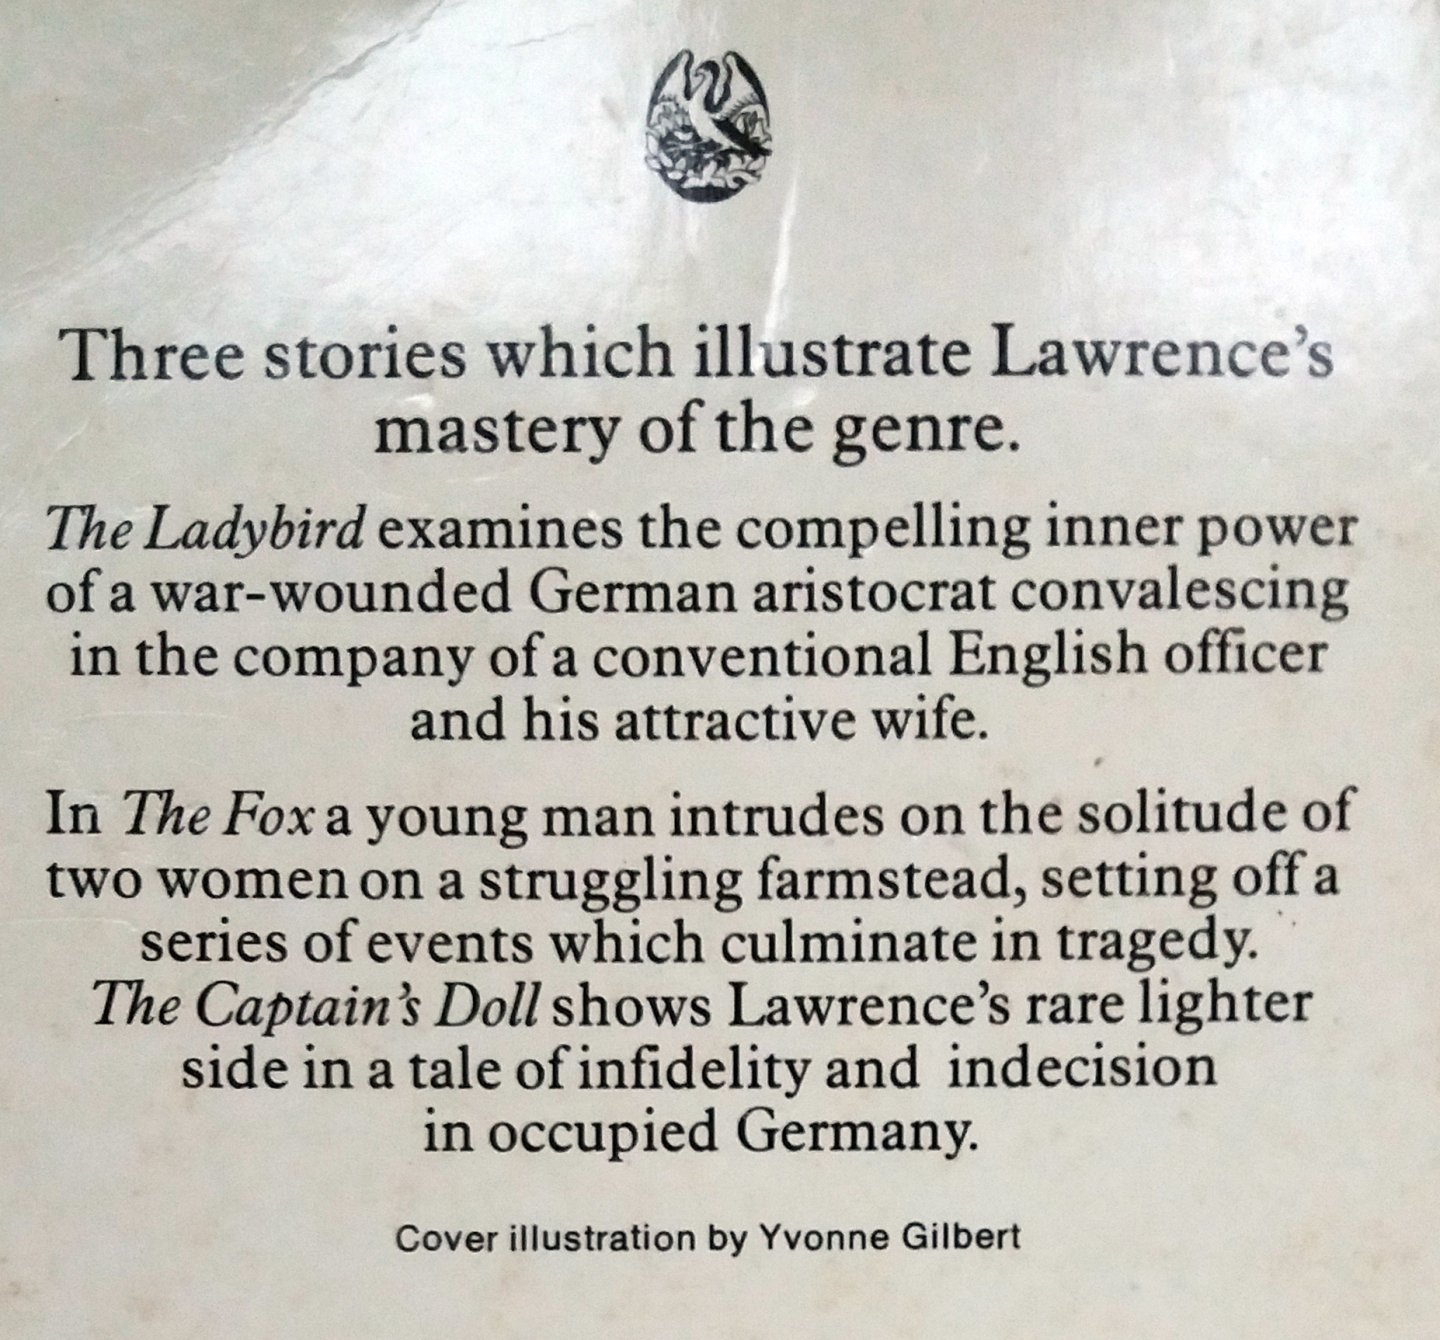 Lawrence, D.H. - Three Novellas (The Ladybird - The Fox - The Captain's Doll) (ENGELSTALIG)